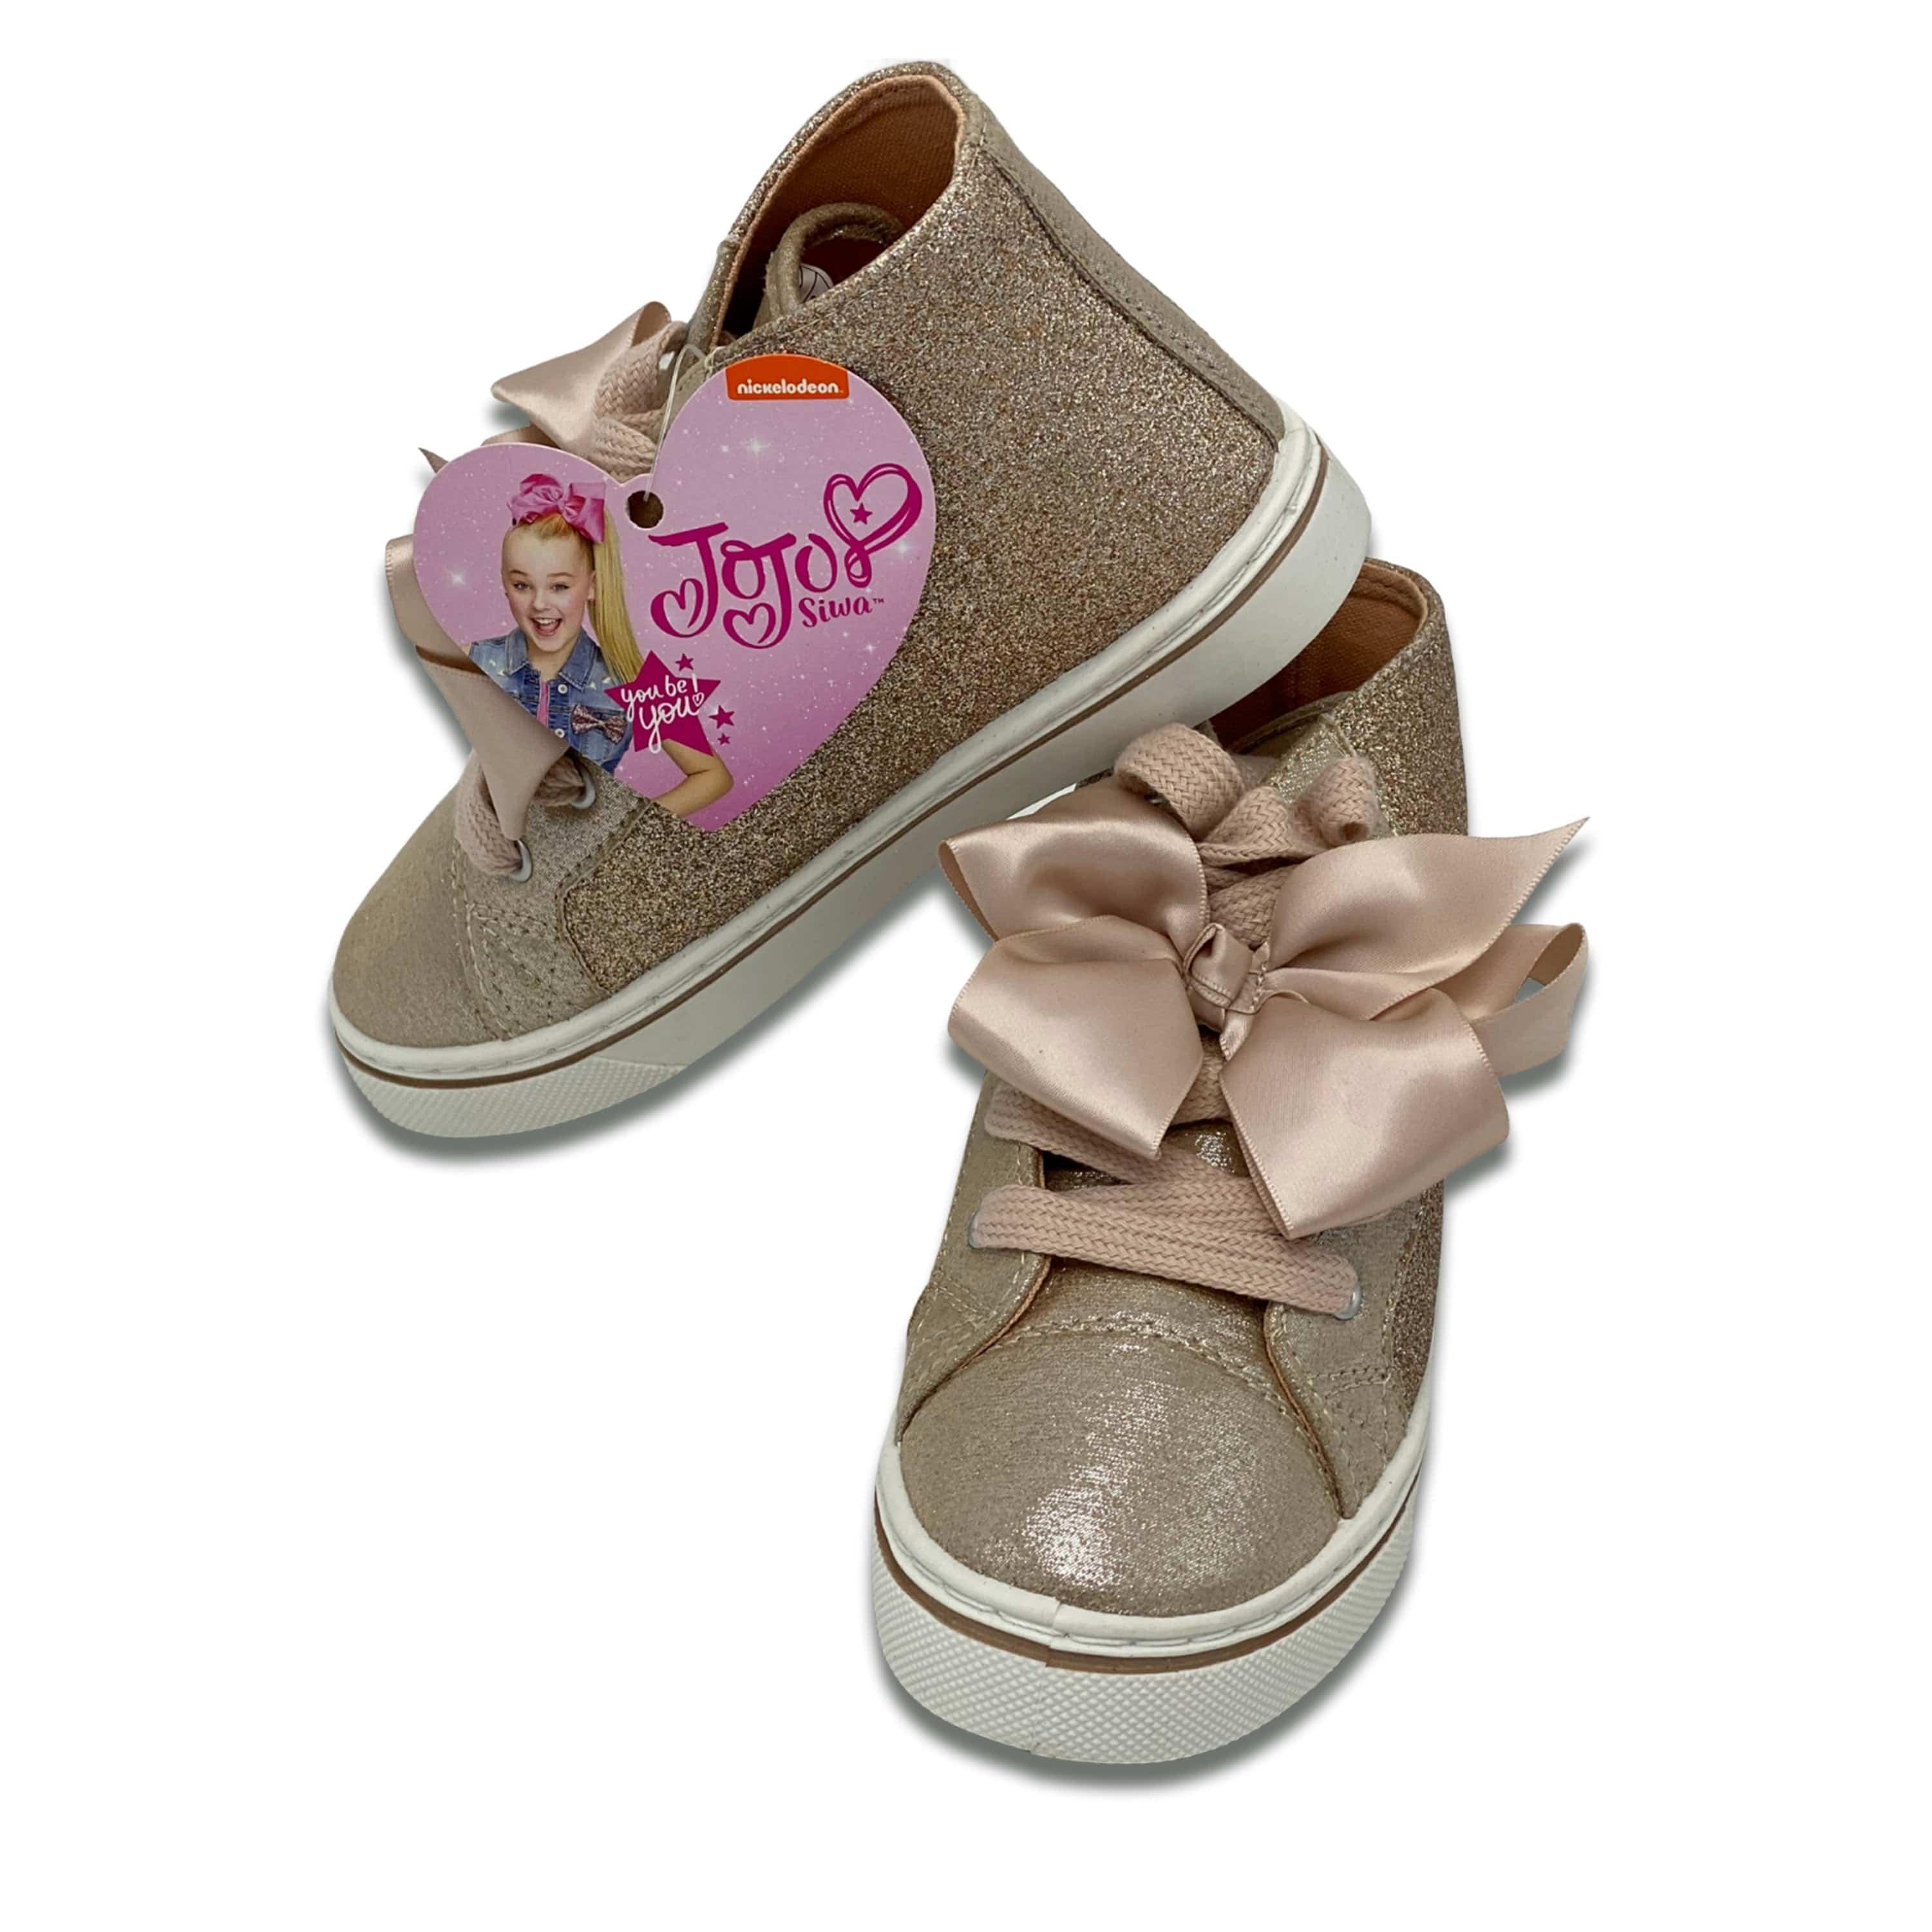 Nwt Jojo Siwa Girl's Bootie Slippers Bow House Shoes Size 9/10 | eBay